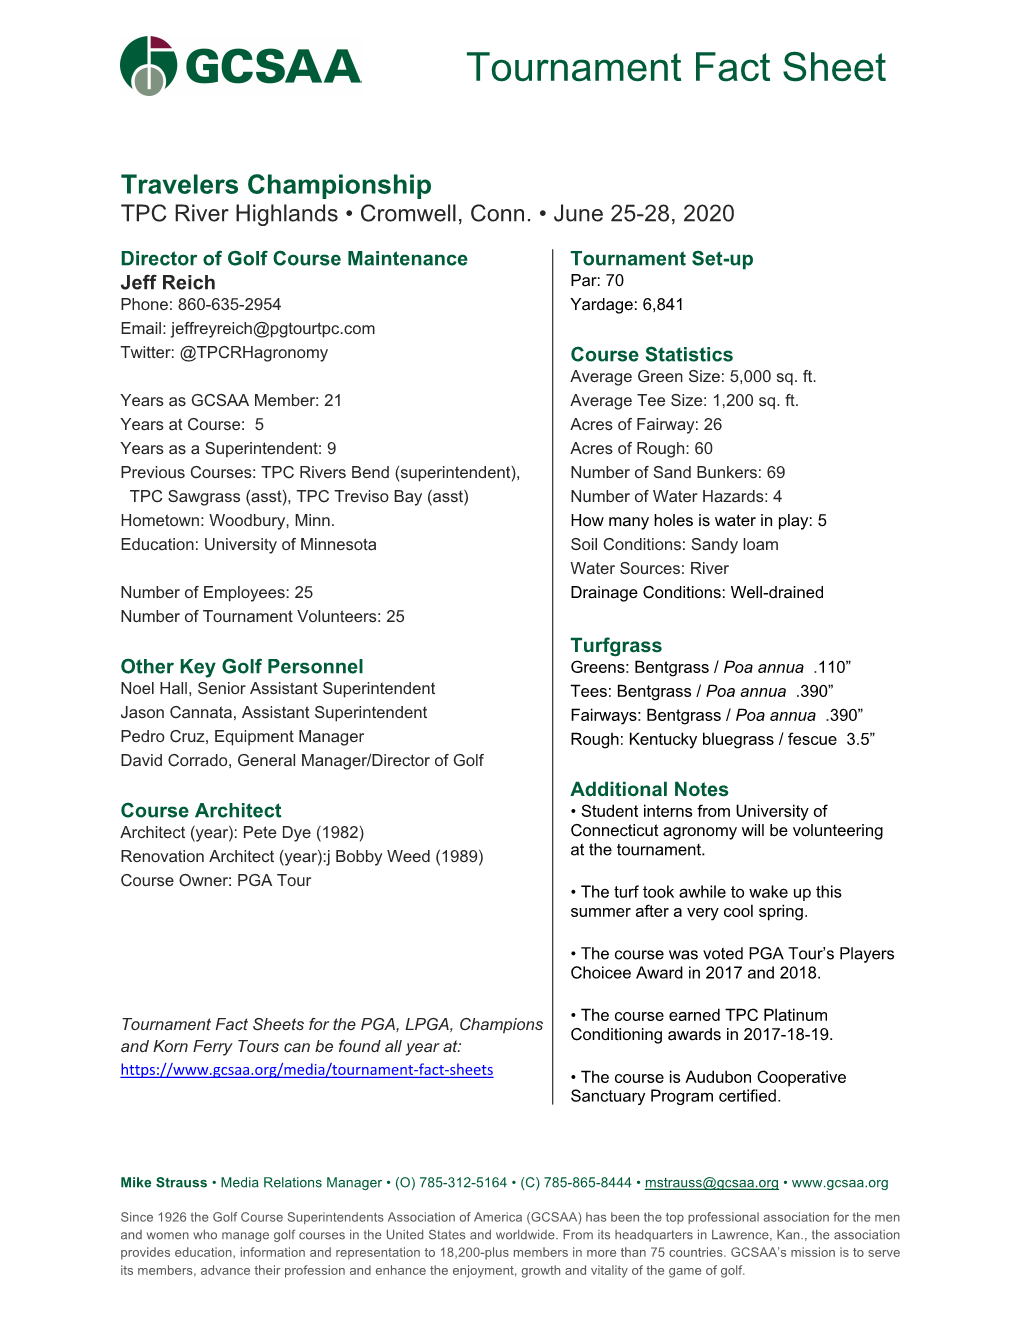 6.25 Travelers Championship (PGA)